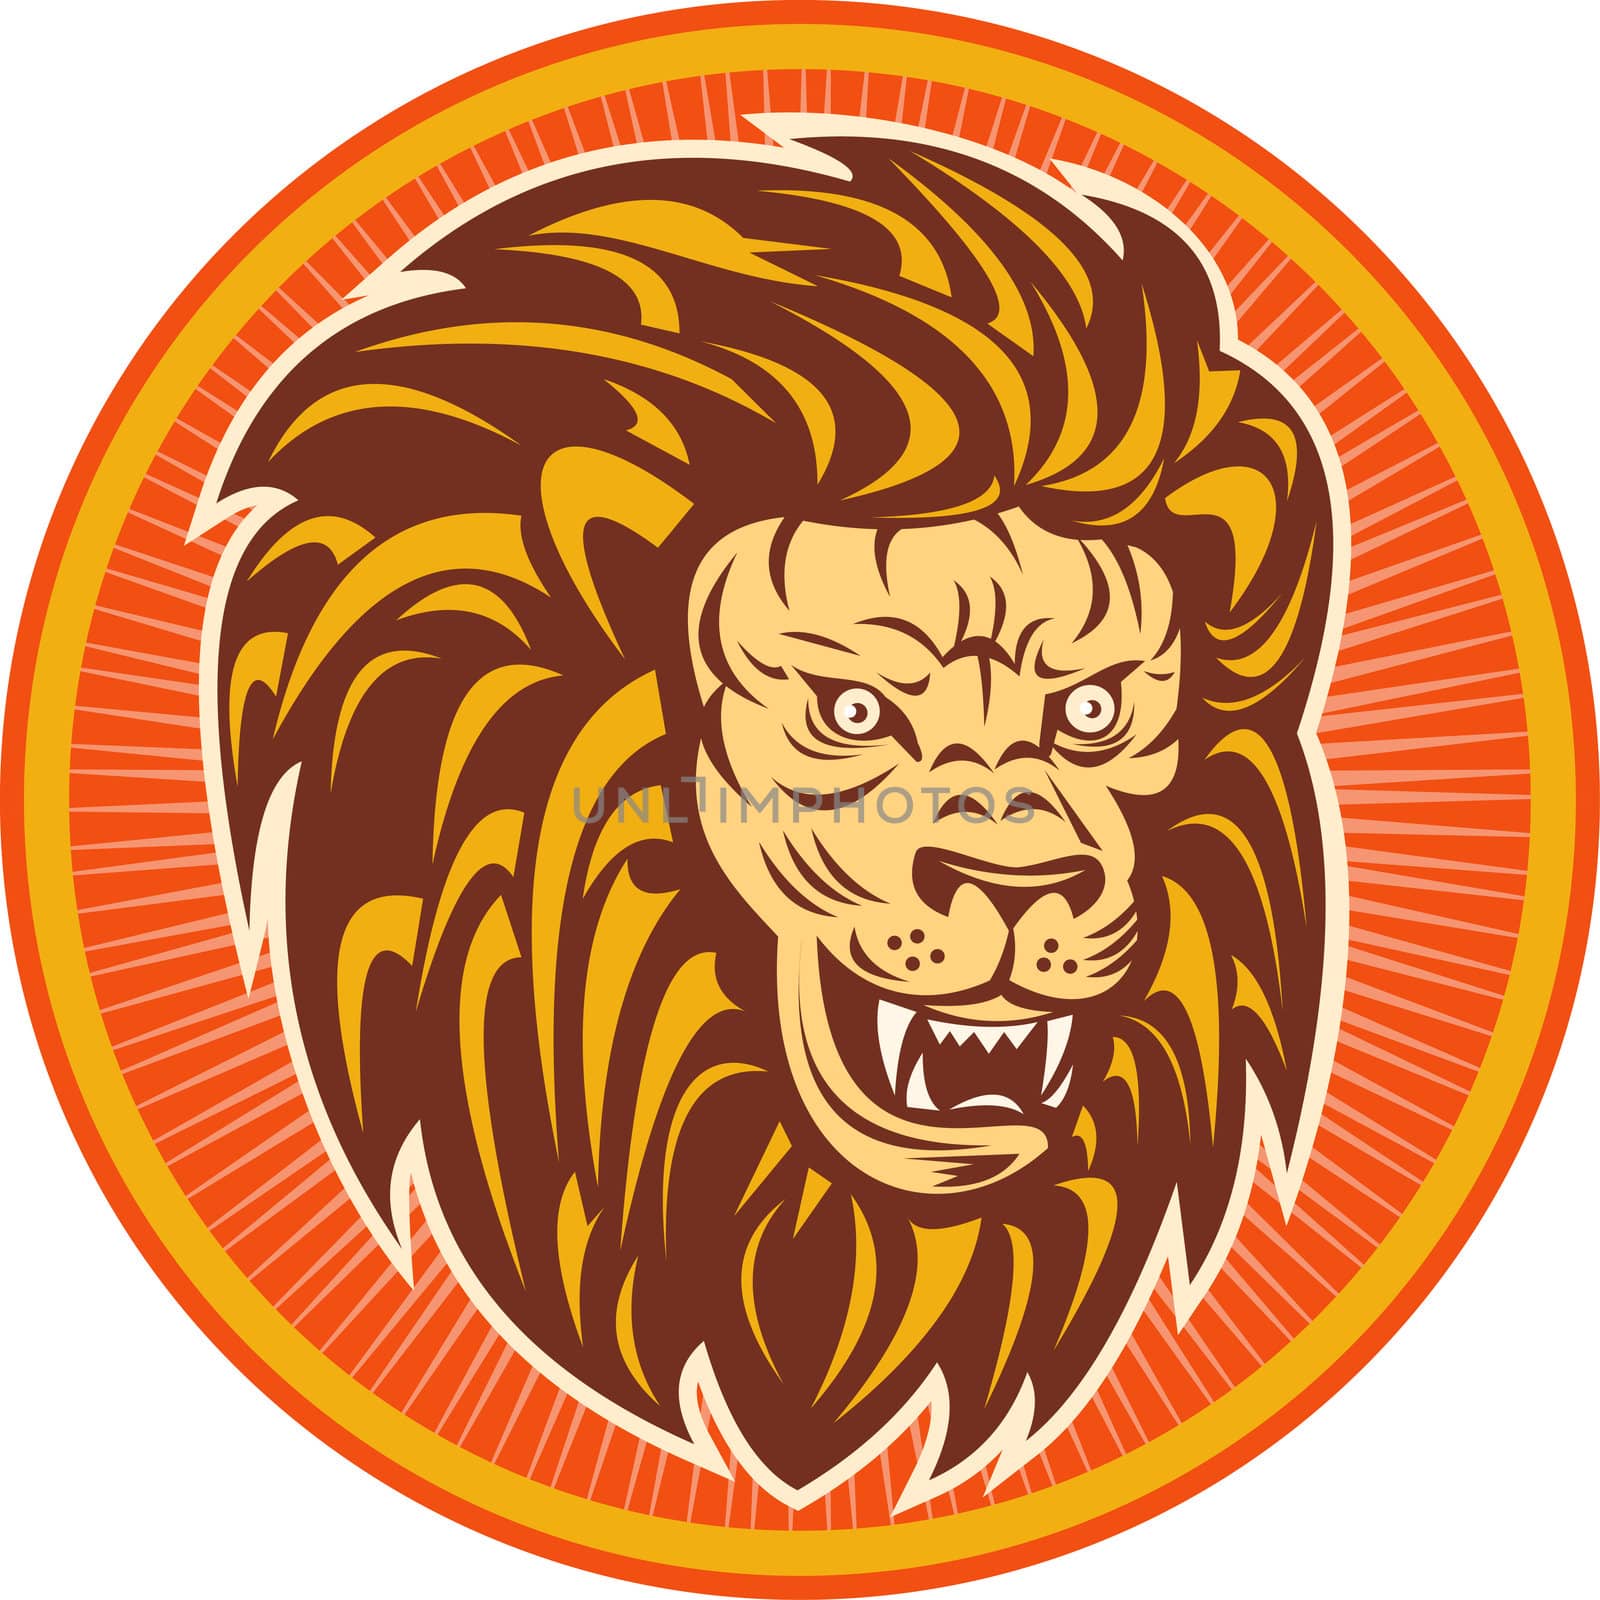 angry lion head set inside a circle by patrimonio